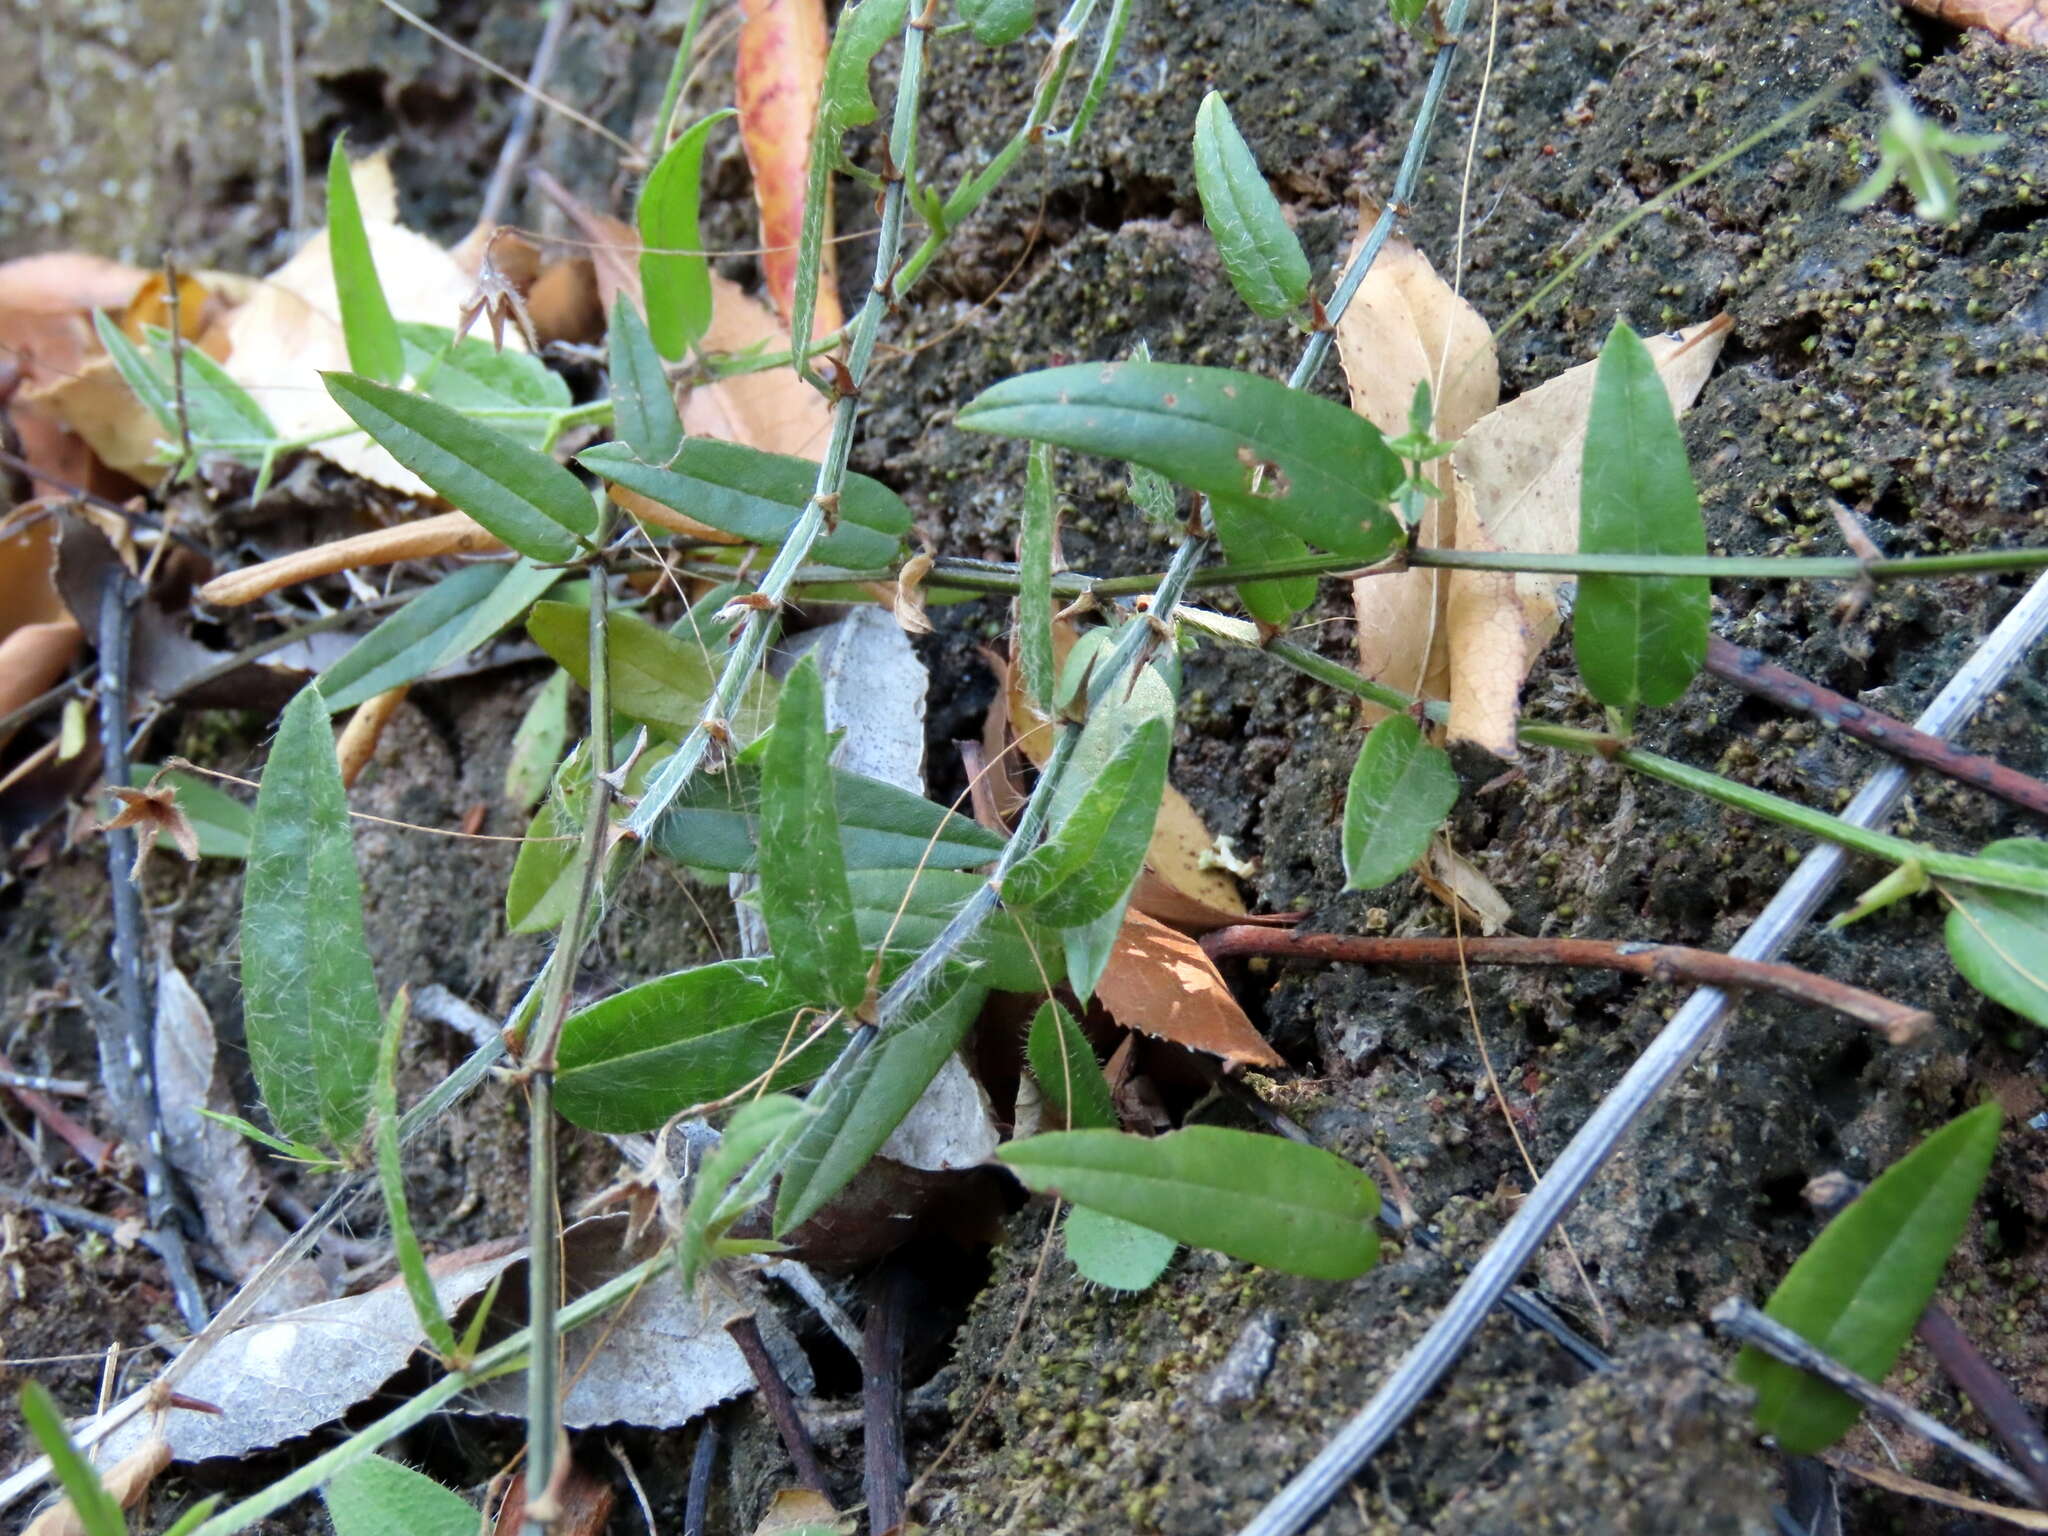 Image of Psoralea laxa T. M. Salter